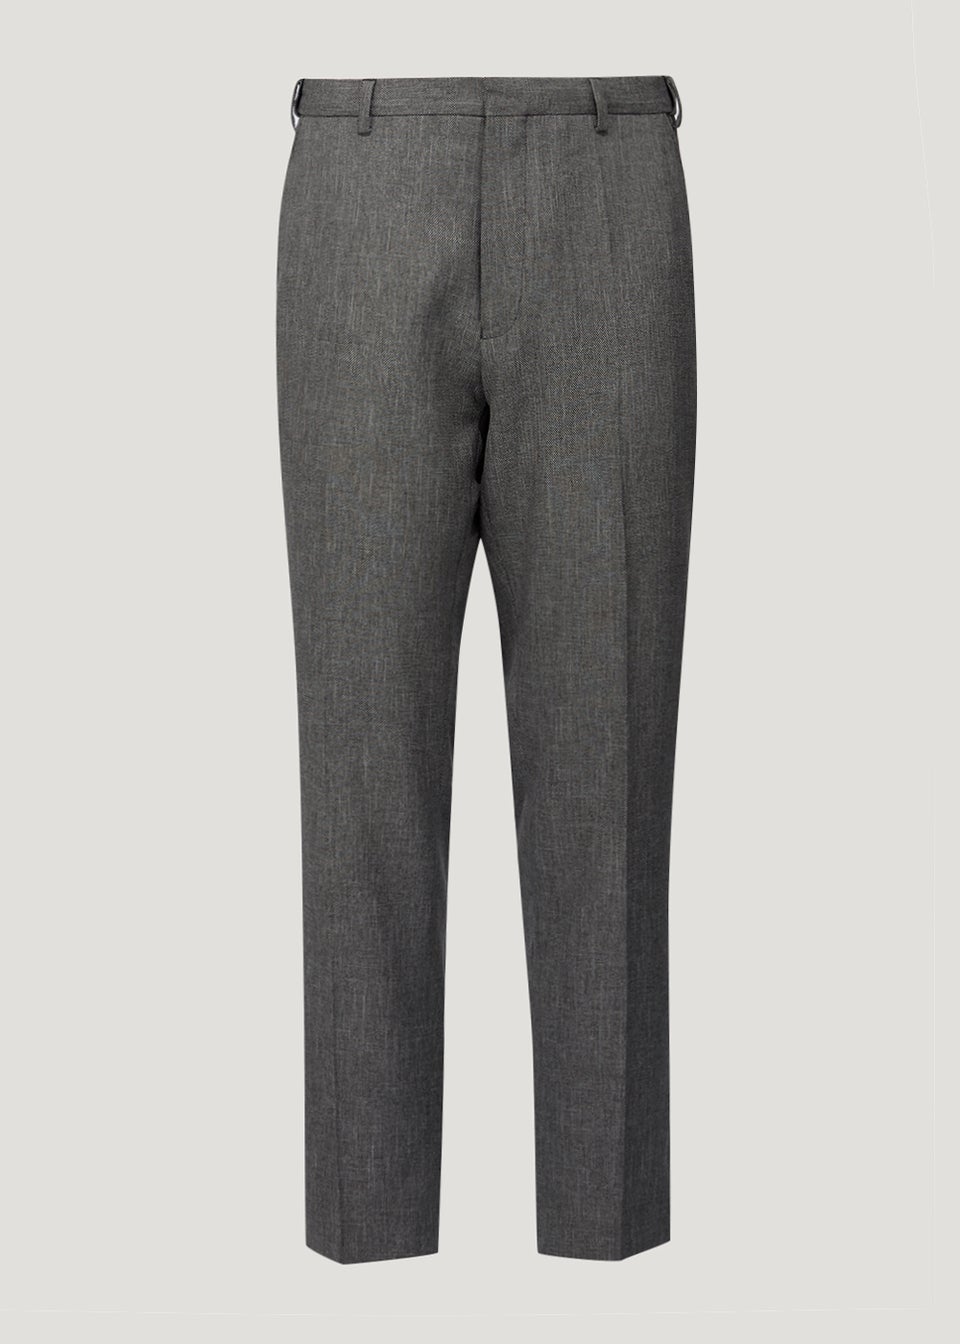 Taylor & Wright Charcoal Textured Flexi Waist Trousers - Matalan